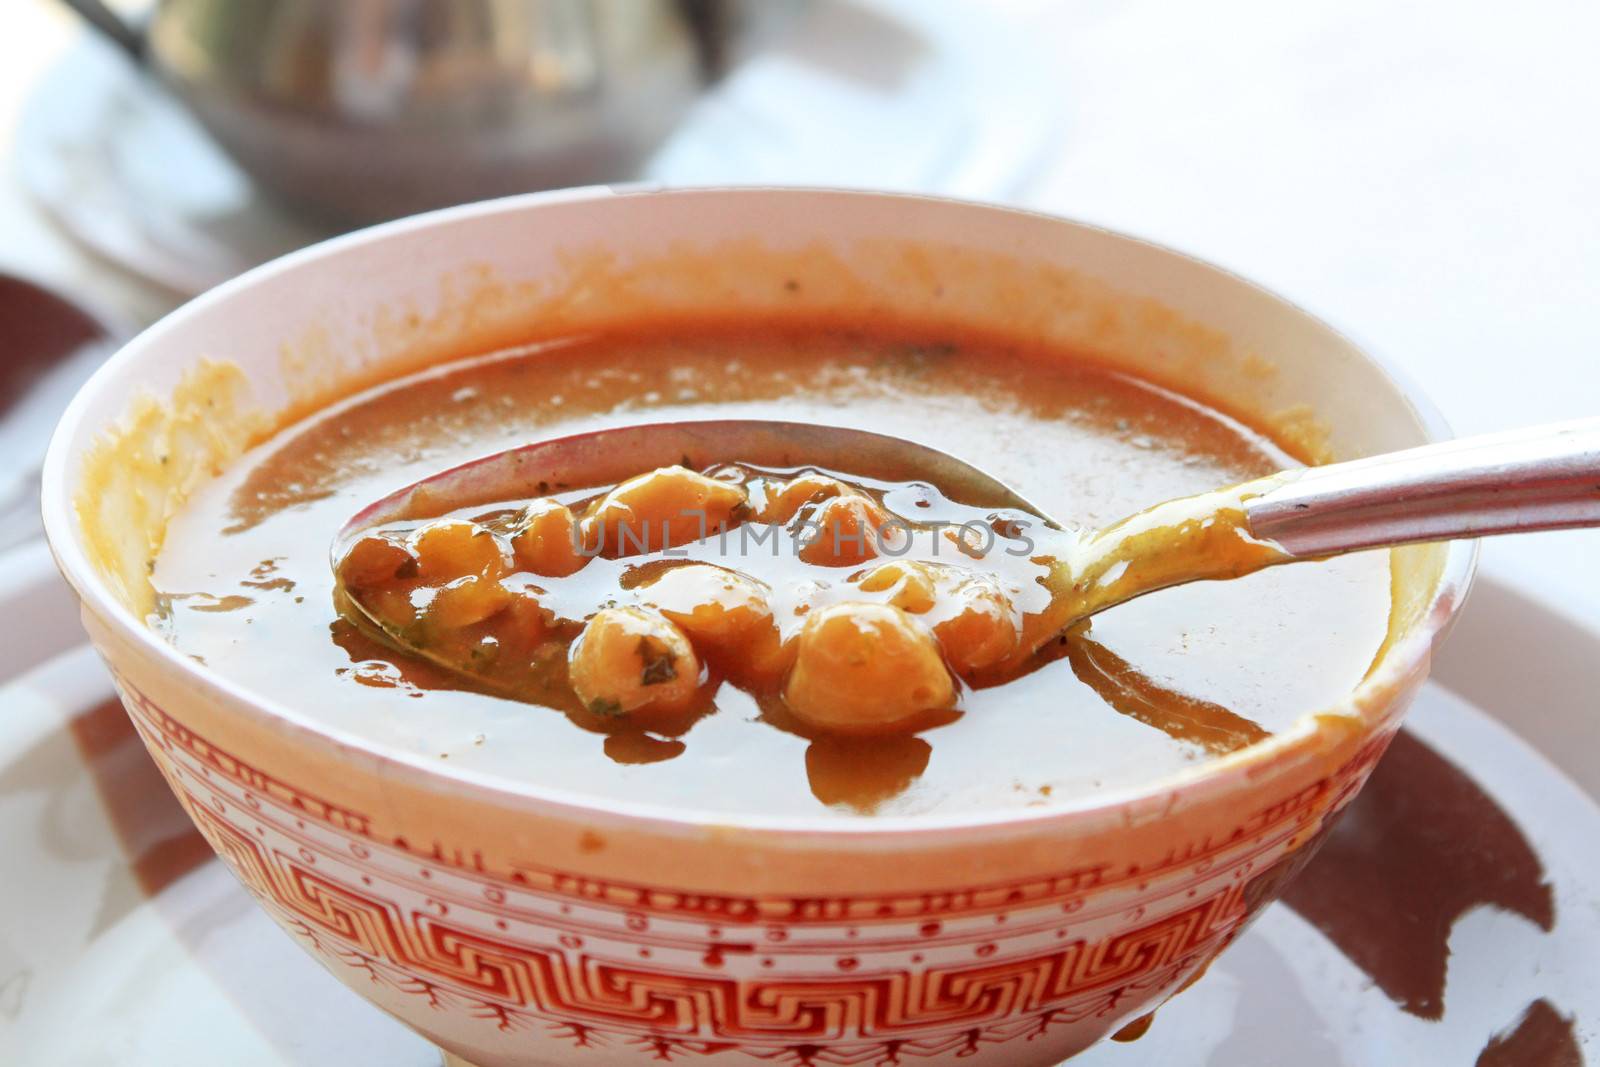 Moroccan traditional soup - harira

